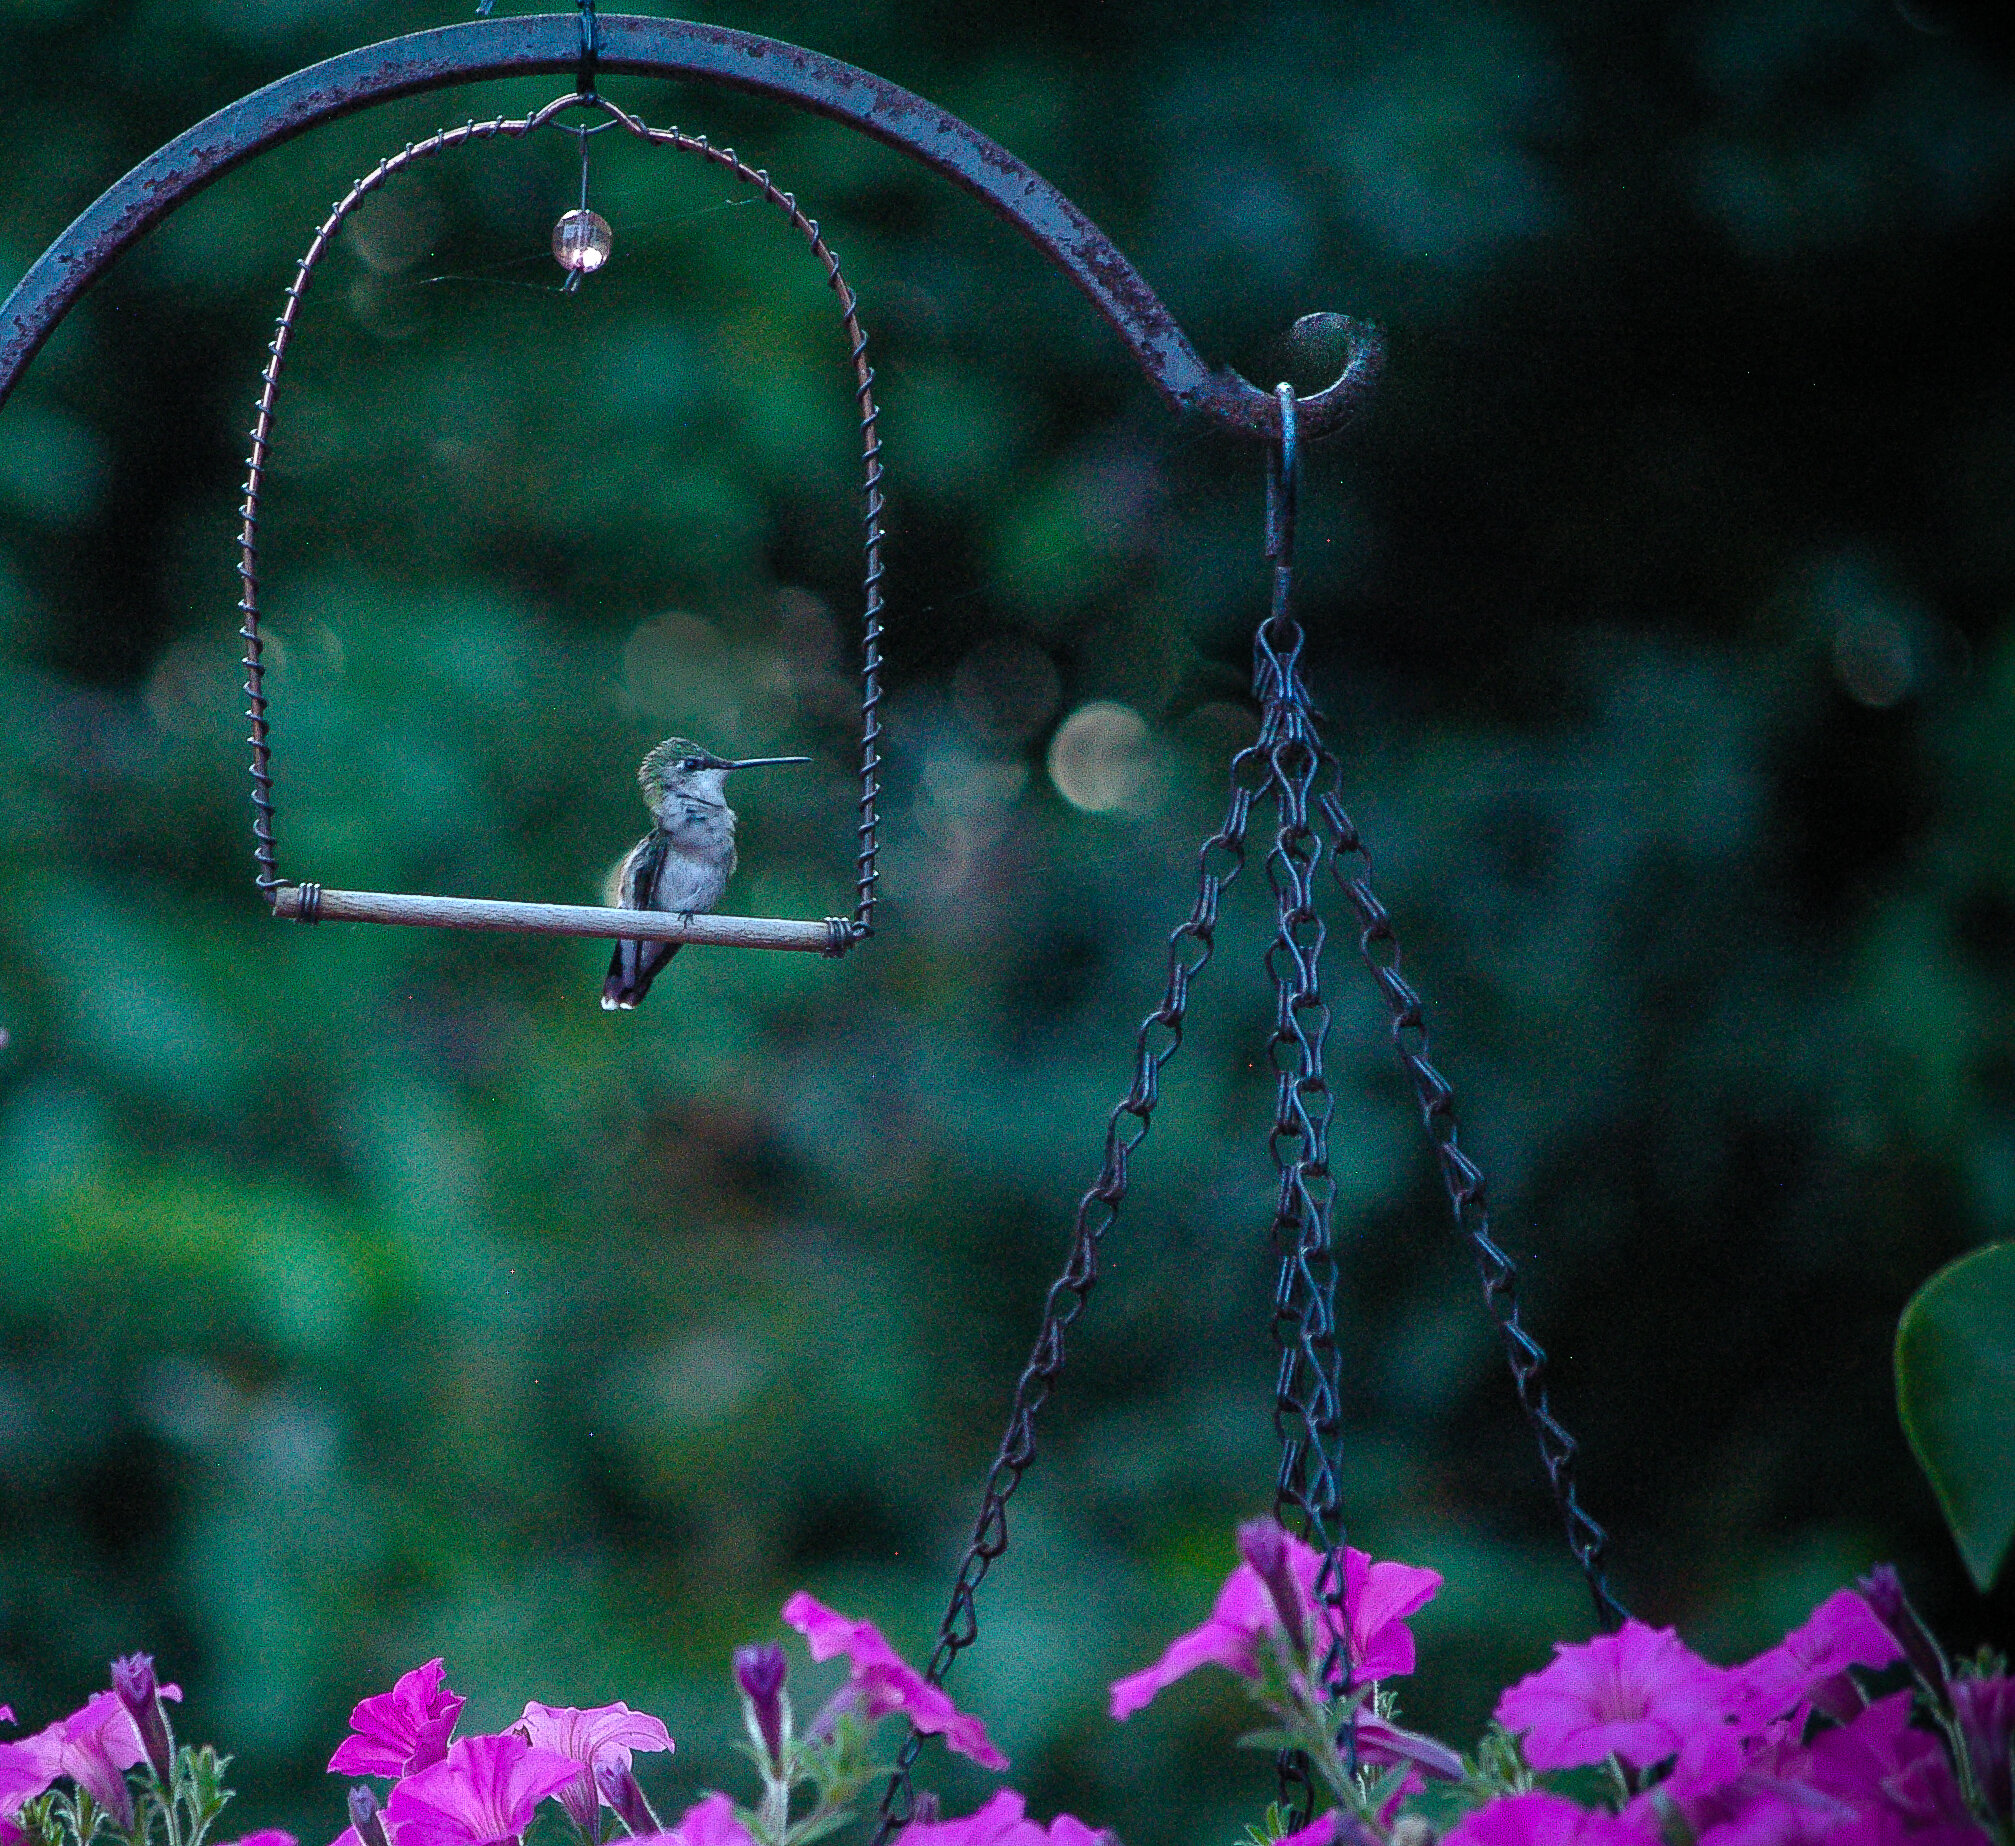 Hummingbird on swing.jpg